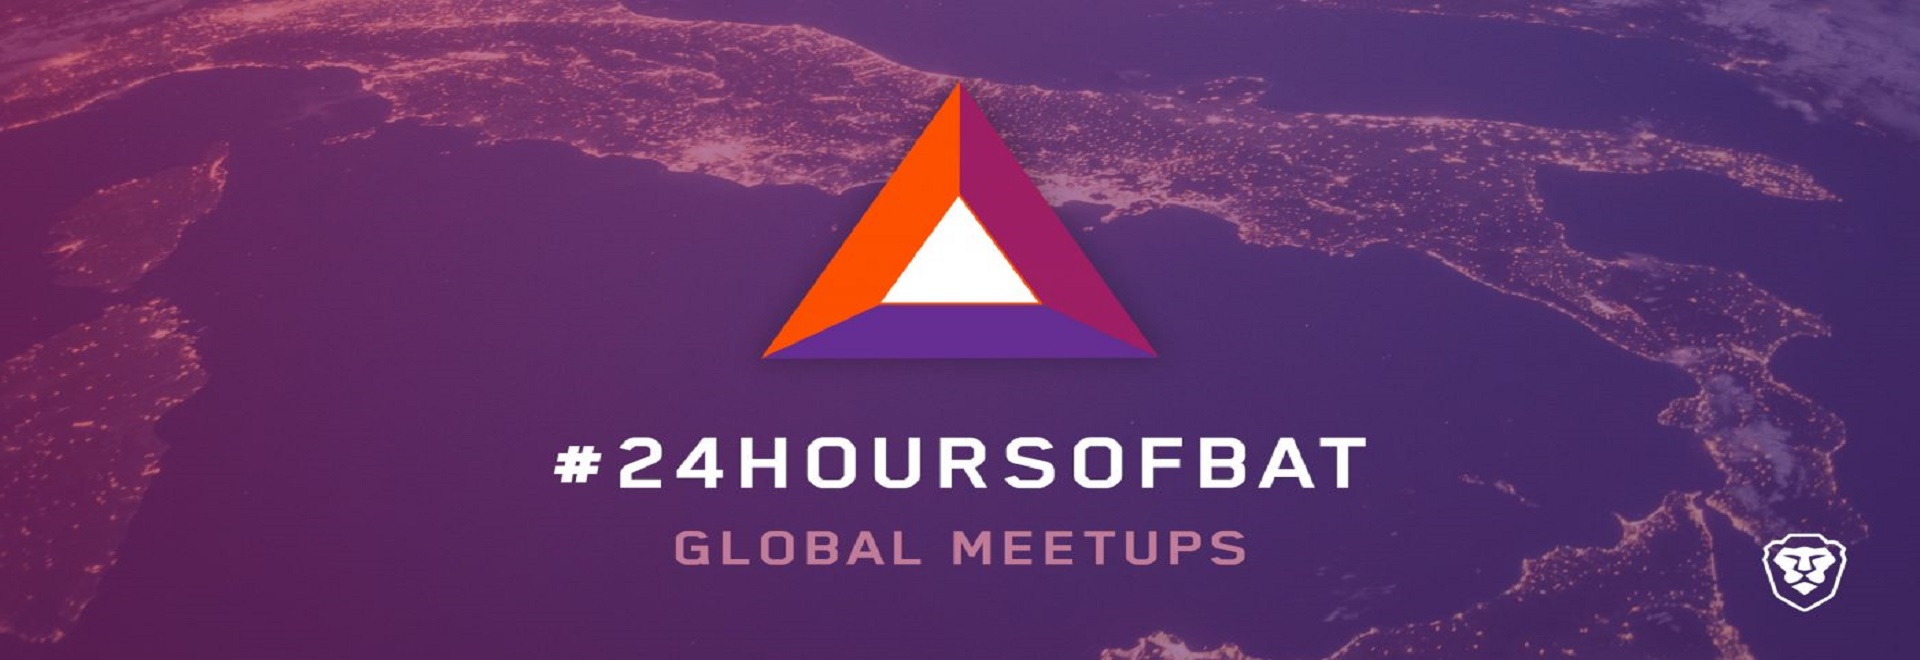 24HoursOfBAT 1400x607 - day of Global Meetups